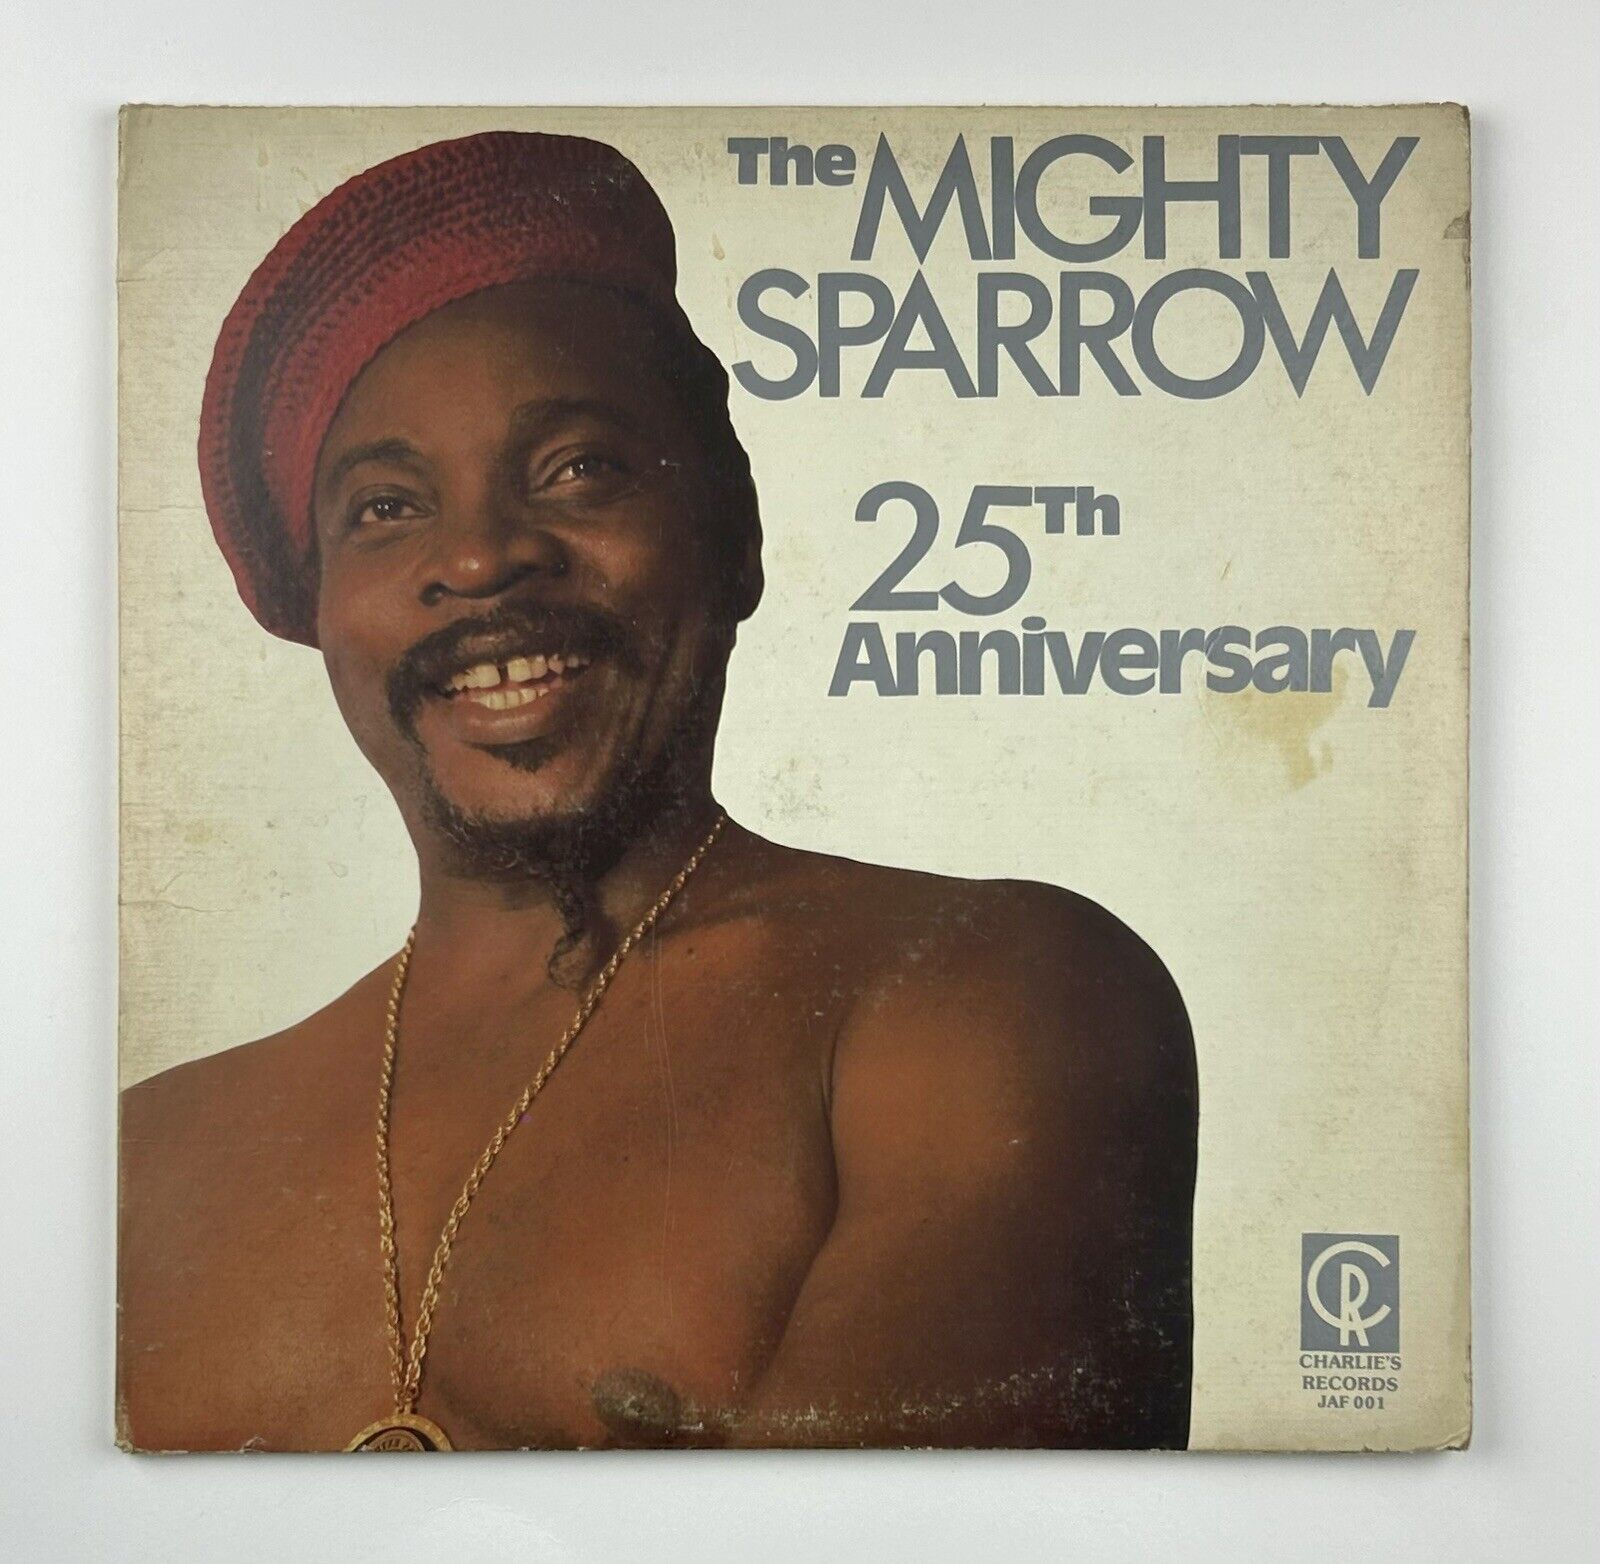 The Mighty Sparrow 25th Anniversary 1980 Vinyl Compilation Record Soca Calypso